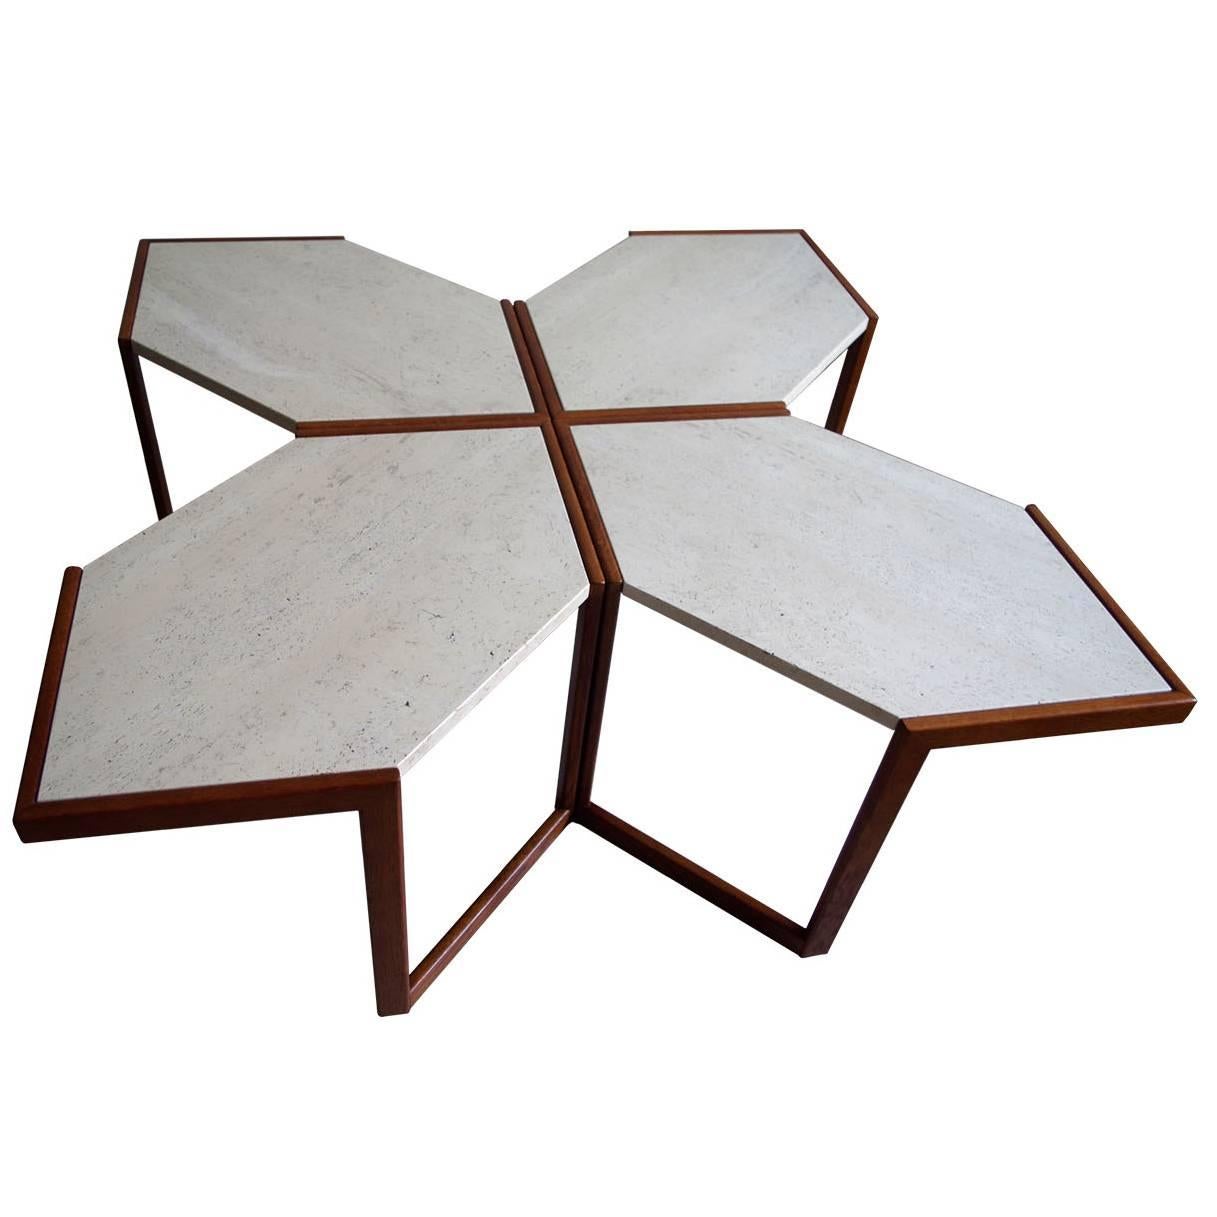 Set of Four Italian Modular Wood and Stone Coffee Side Sofa Tables, 1960s